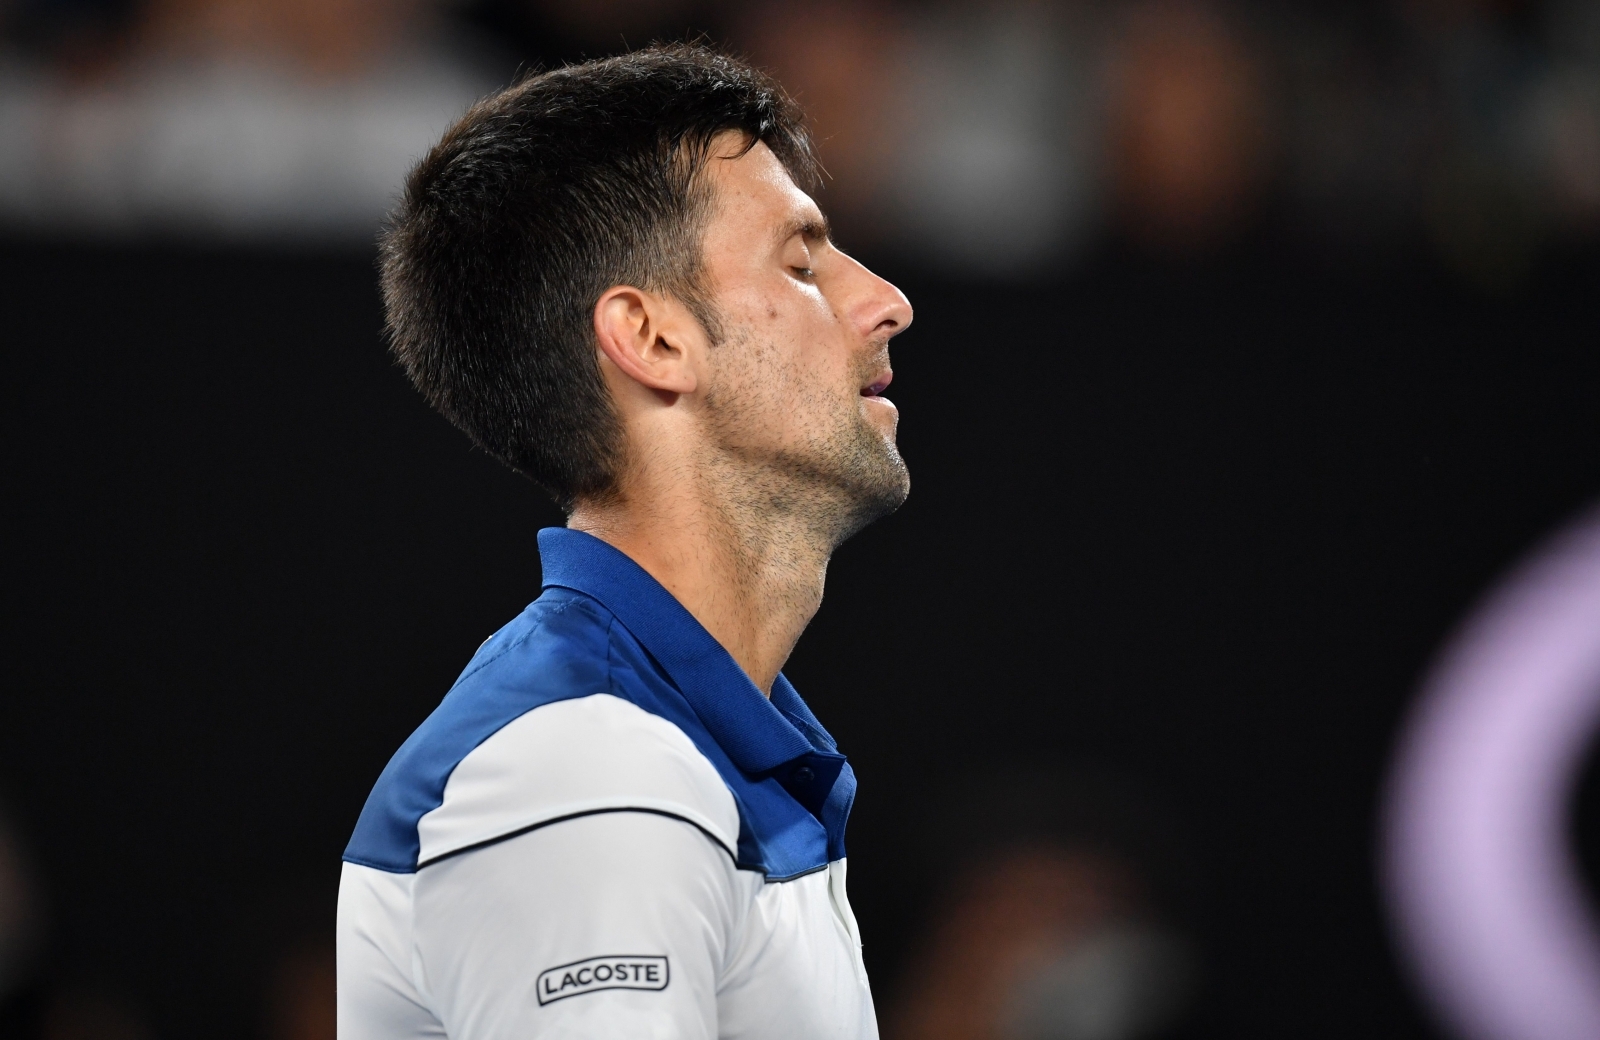 Novak Djokovic's shock return date confirmed after 'failings' following elbow surgery